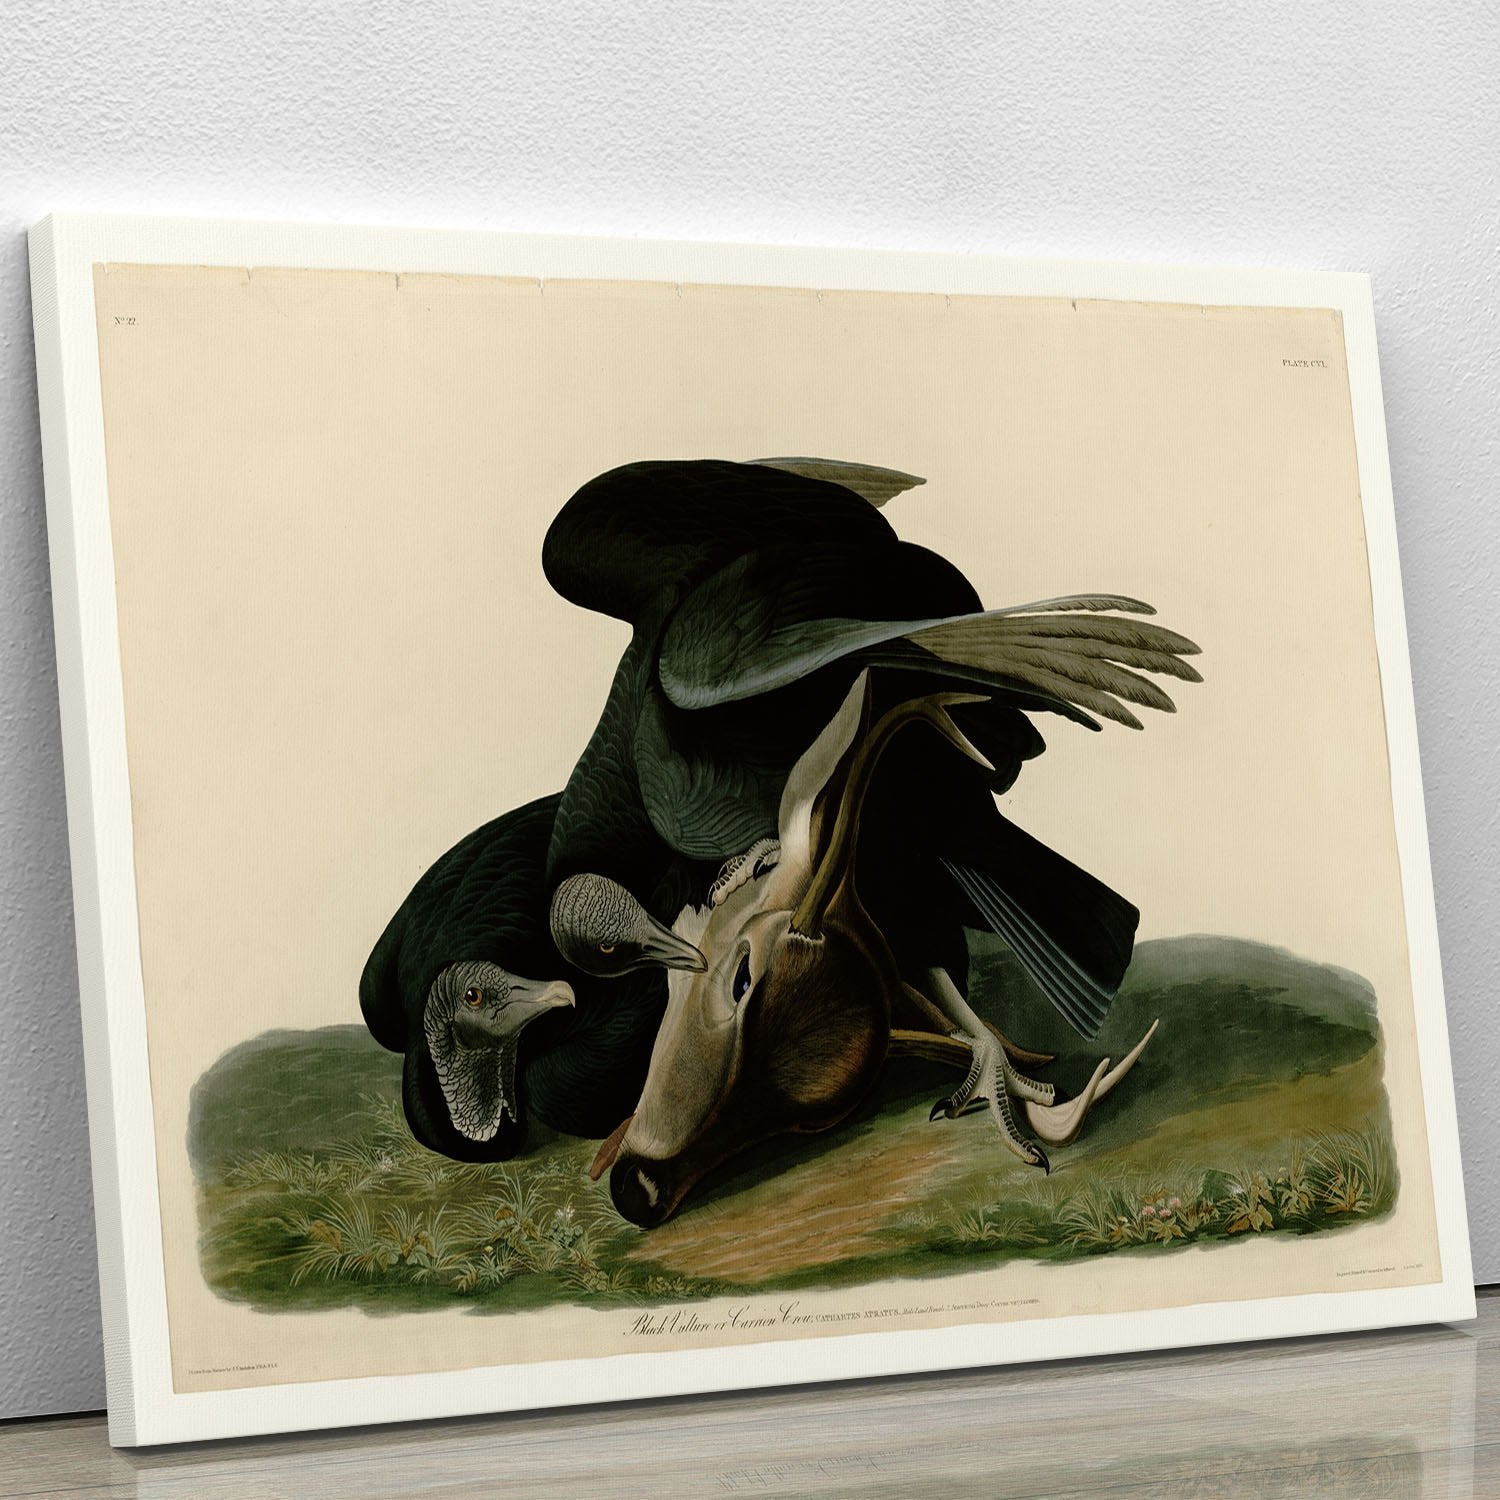 Black Vulture by Audubon Canvas Print or Poster